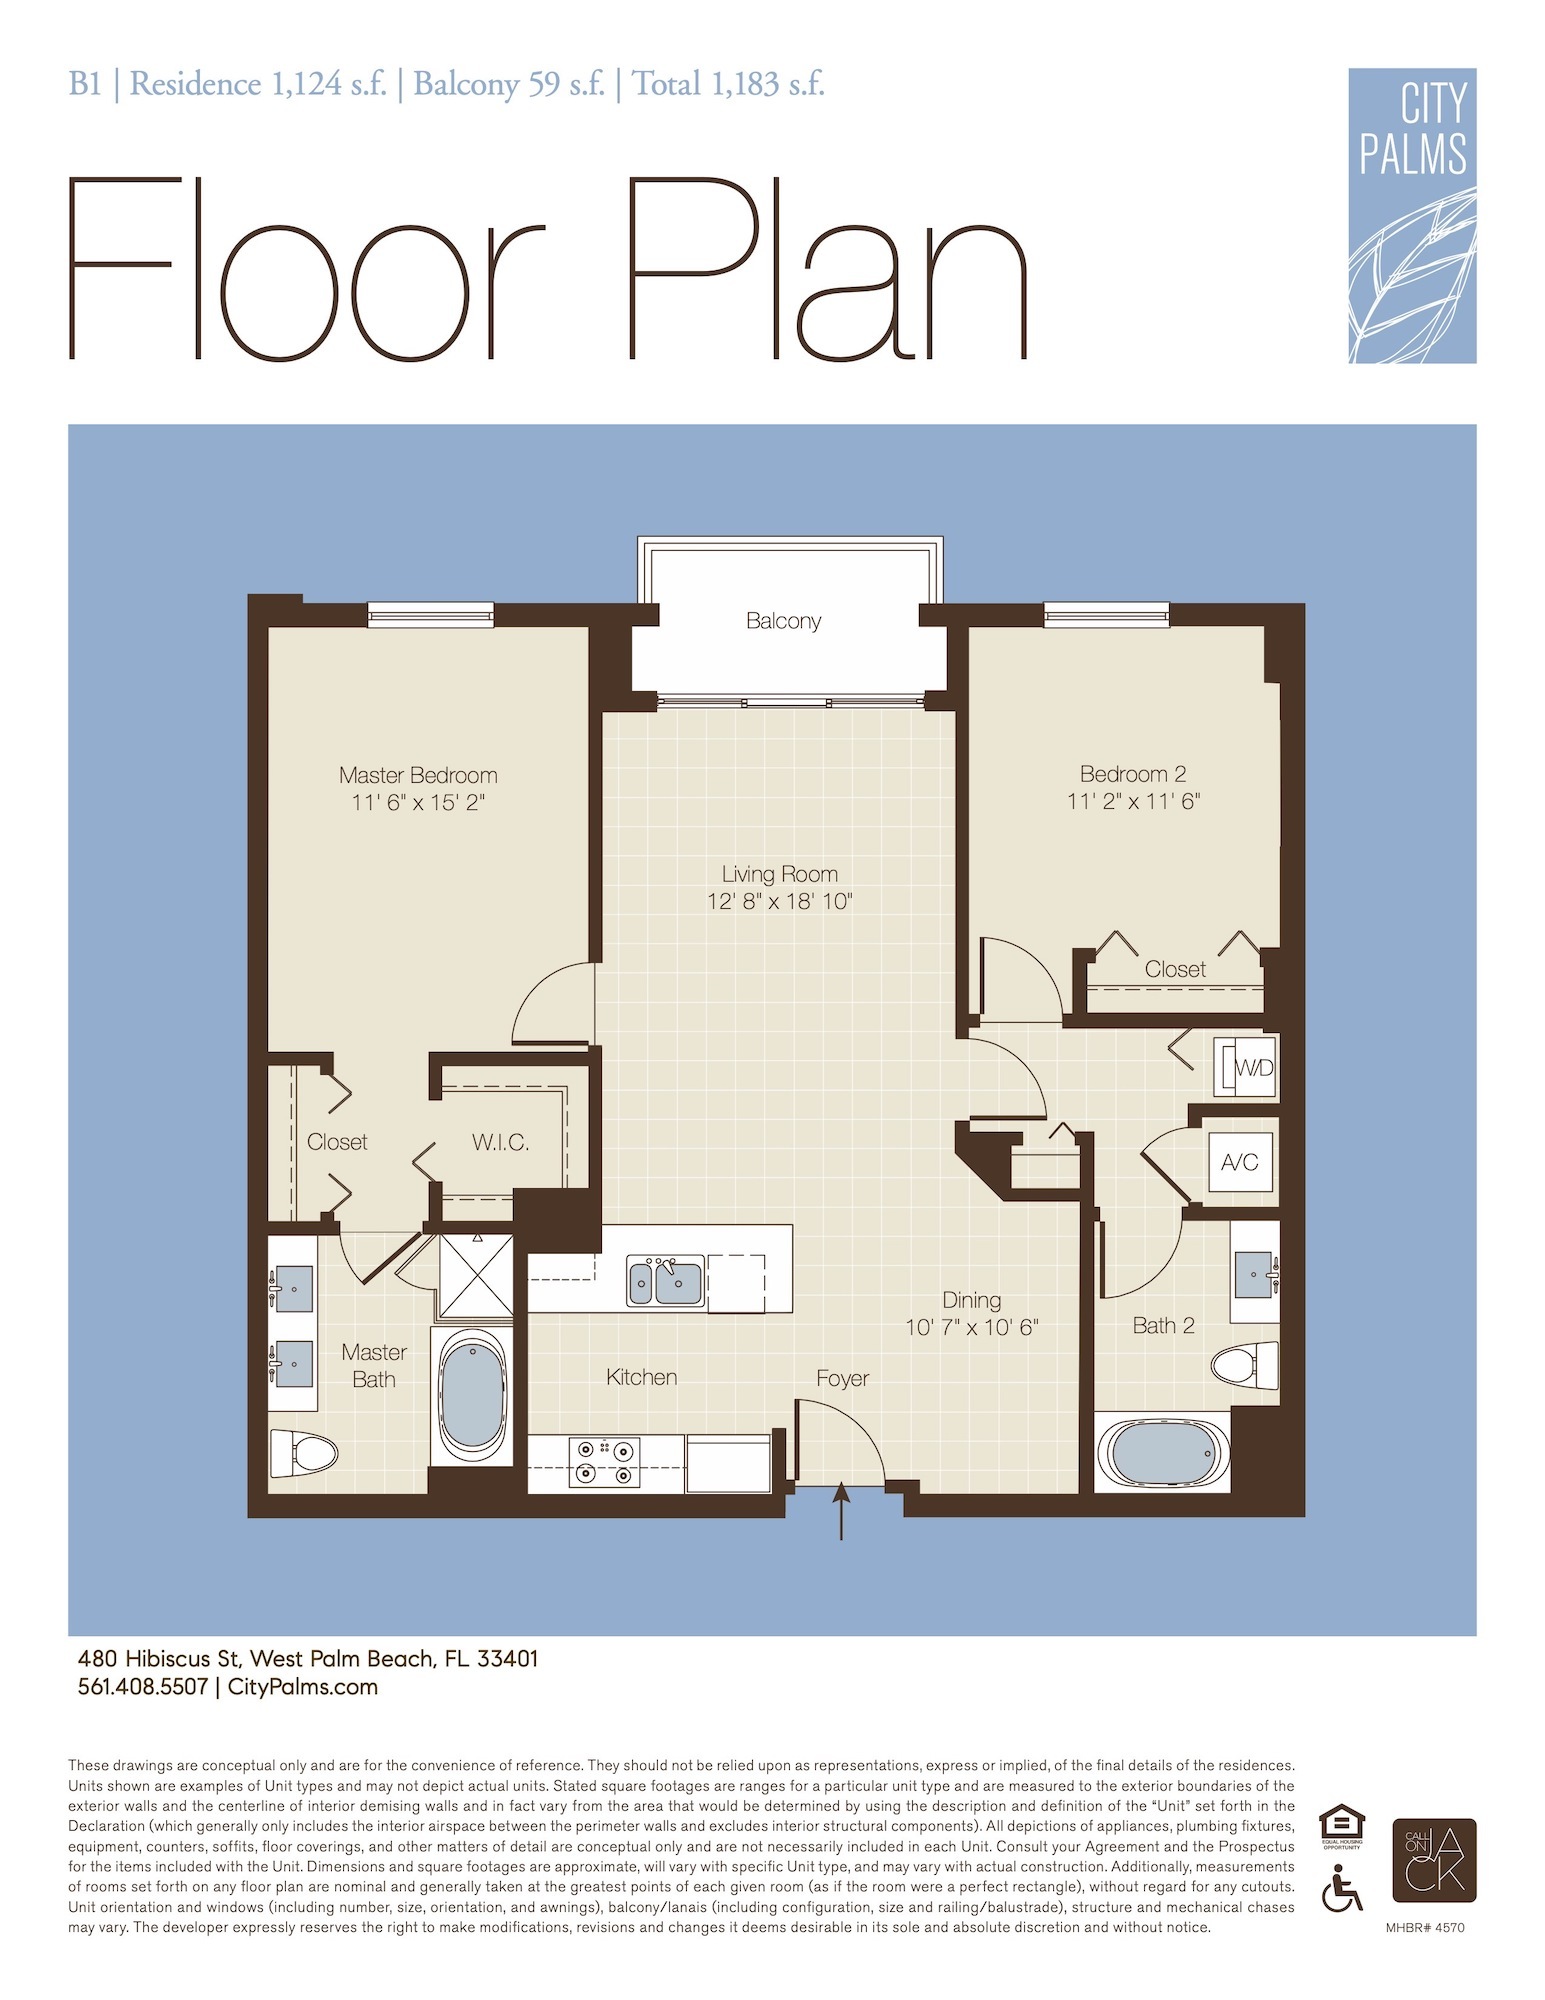 Floor Plan for City Palms Floorplans, B1